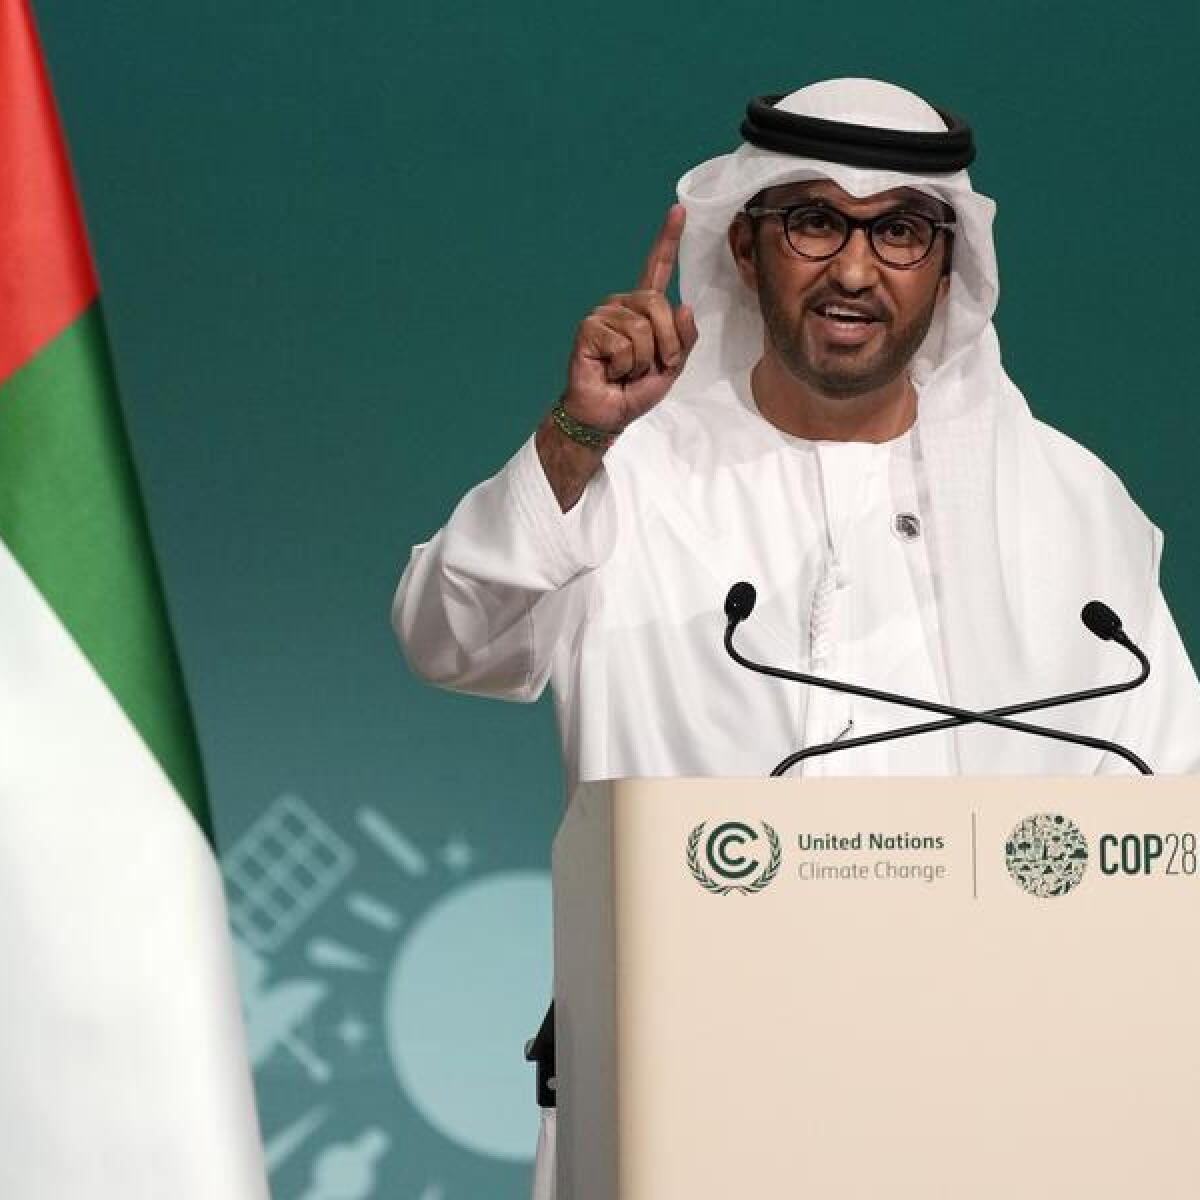 COP28 president Sultan al-Jaber